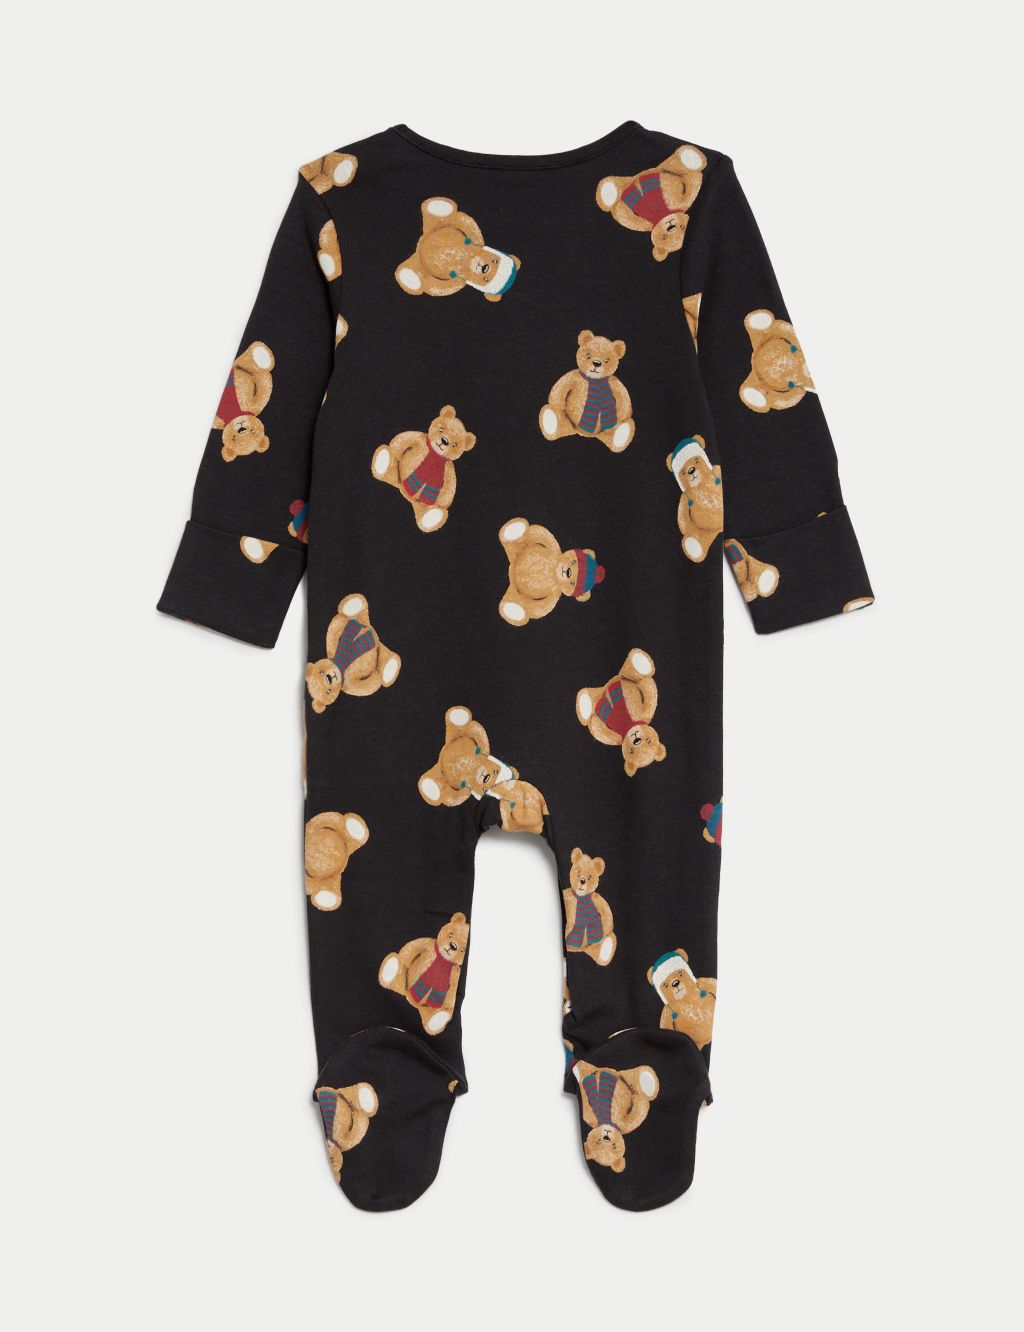 Kids' Spencer Bear™ Family Christmas Sleepsuit (6½lbs - 3 Yrs) image 3